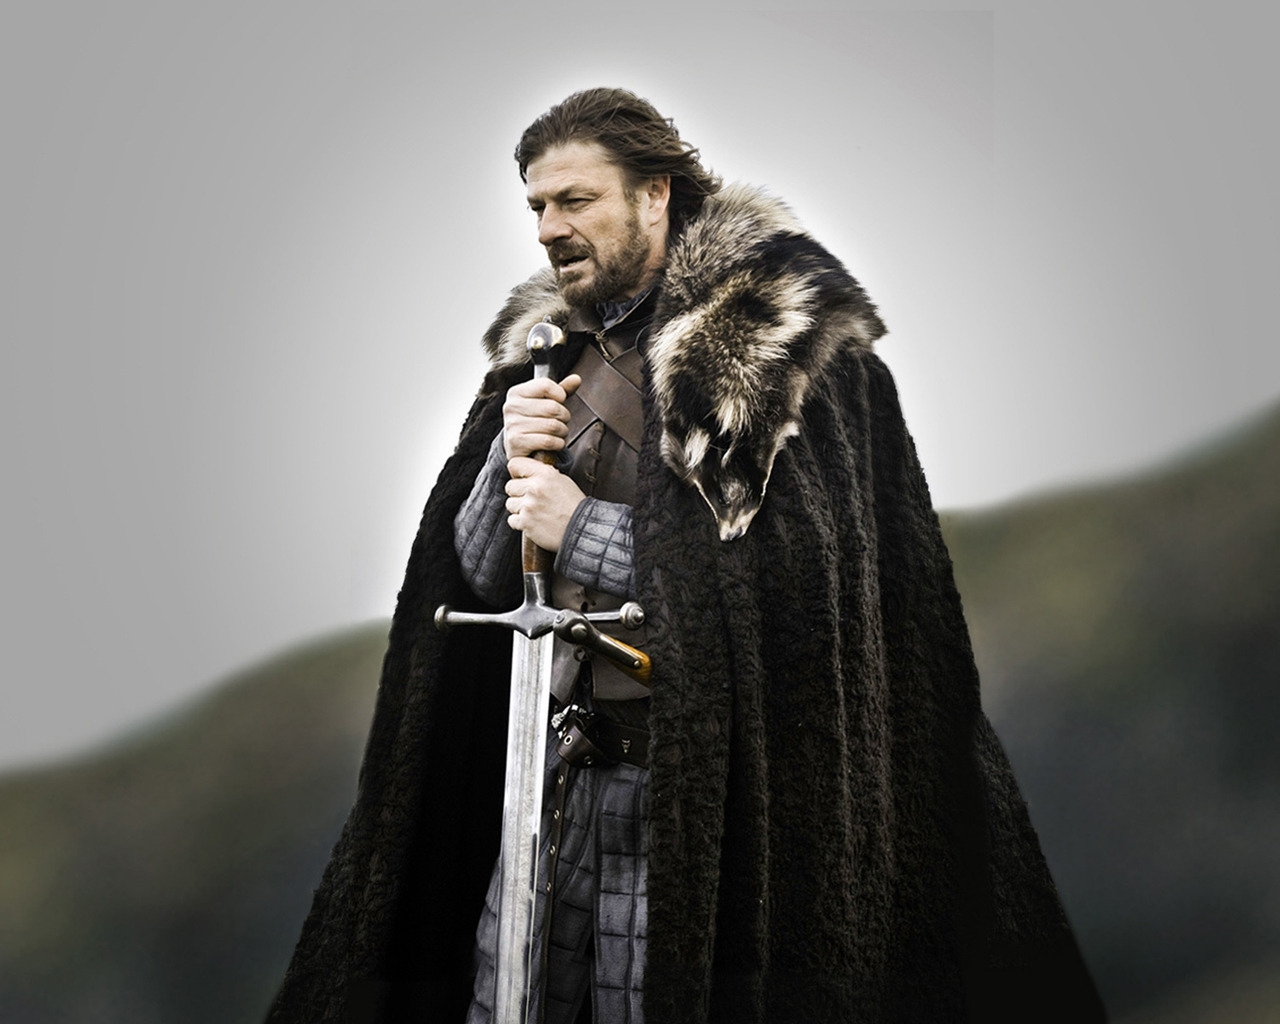 Eddard Stark for 1280 x 1024 resolution